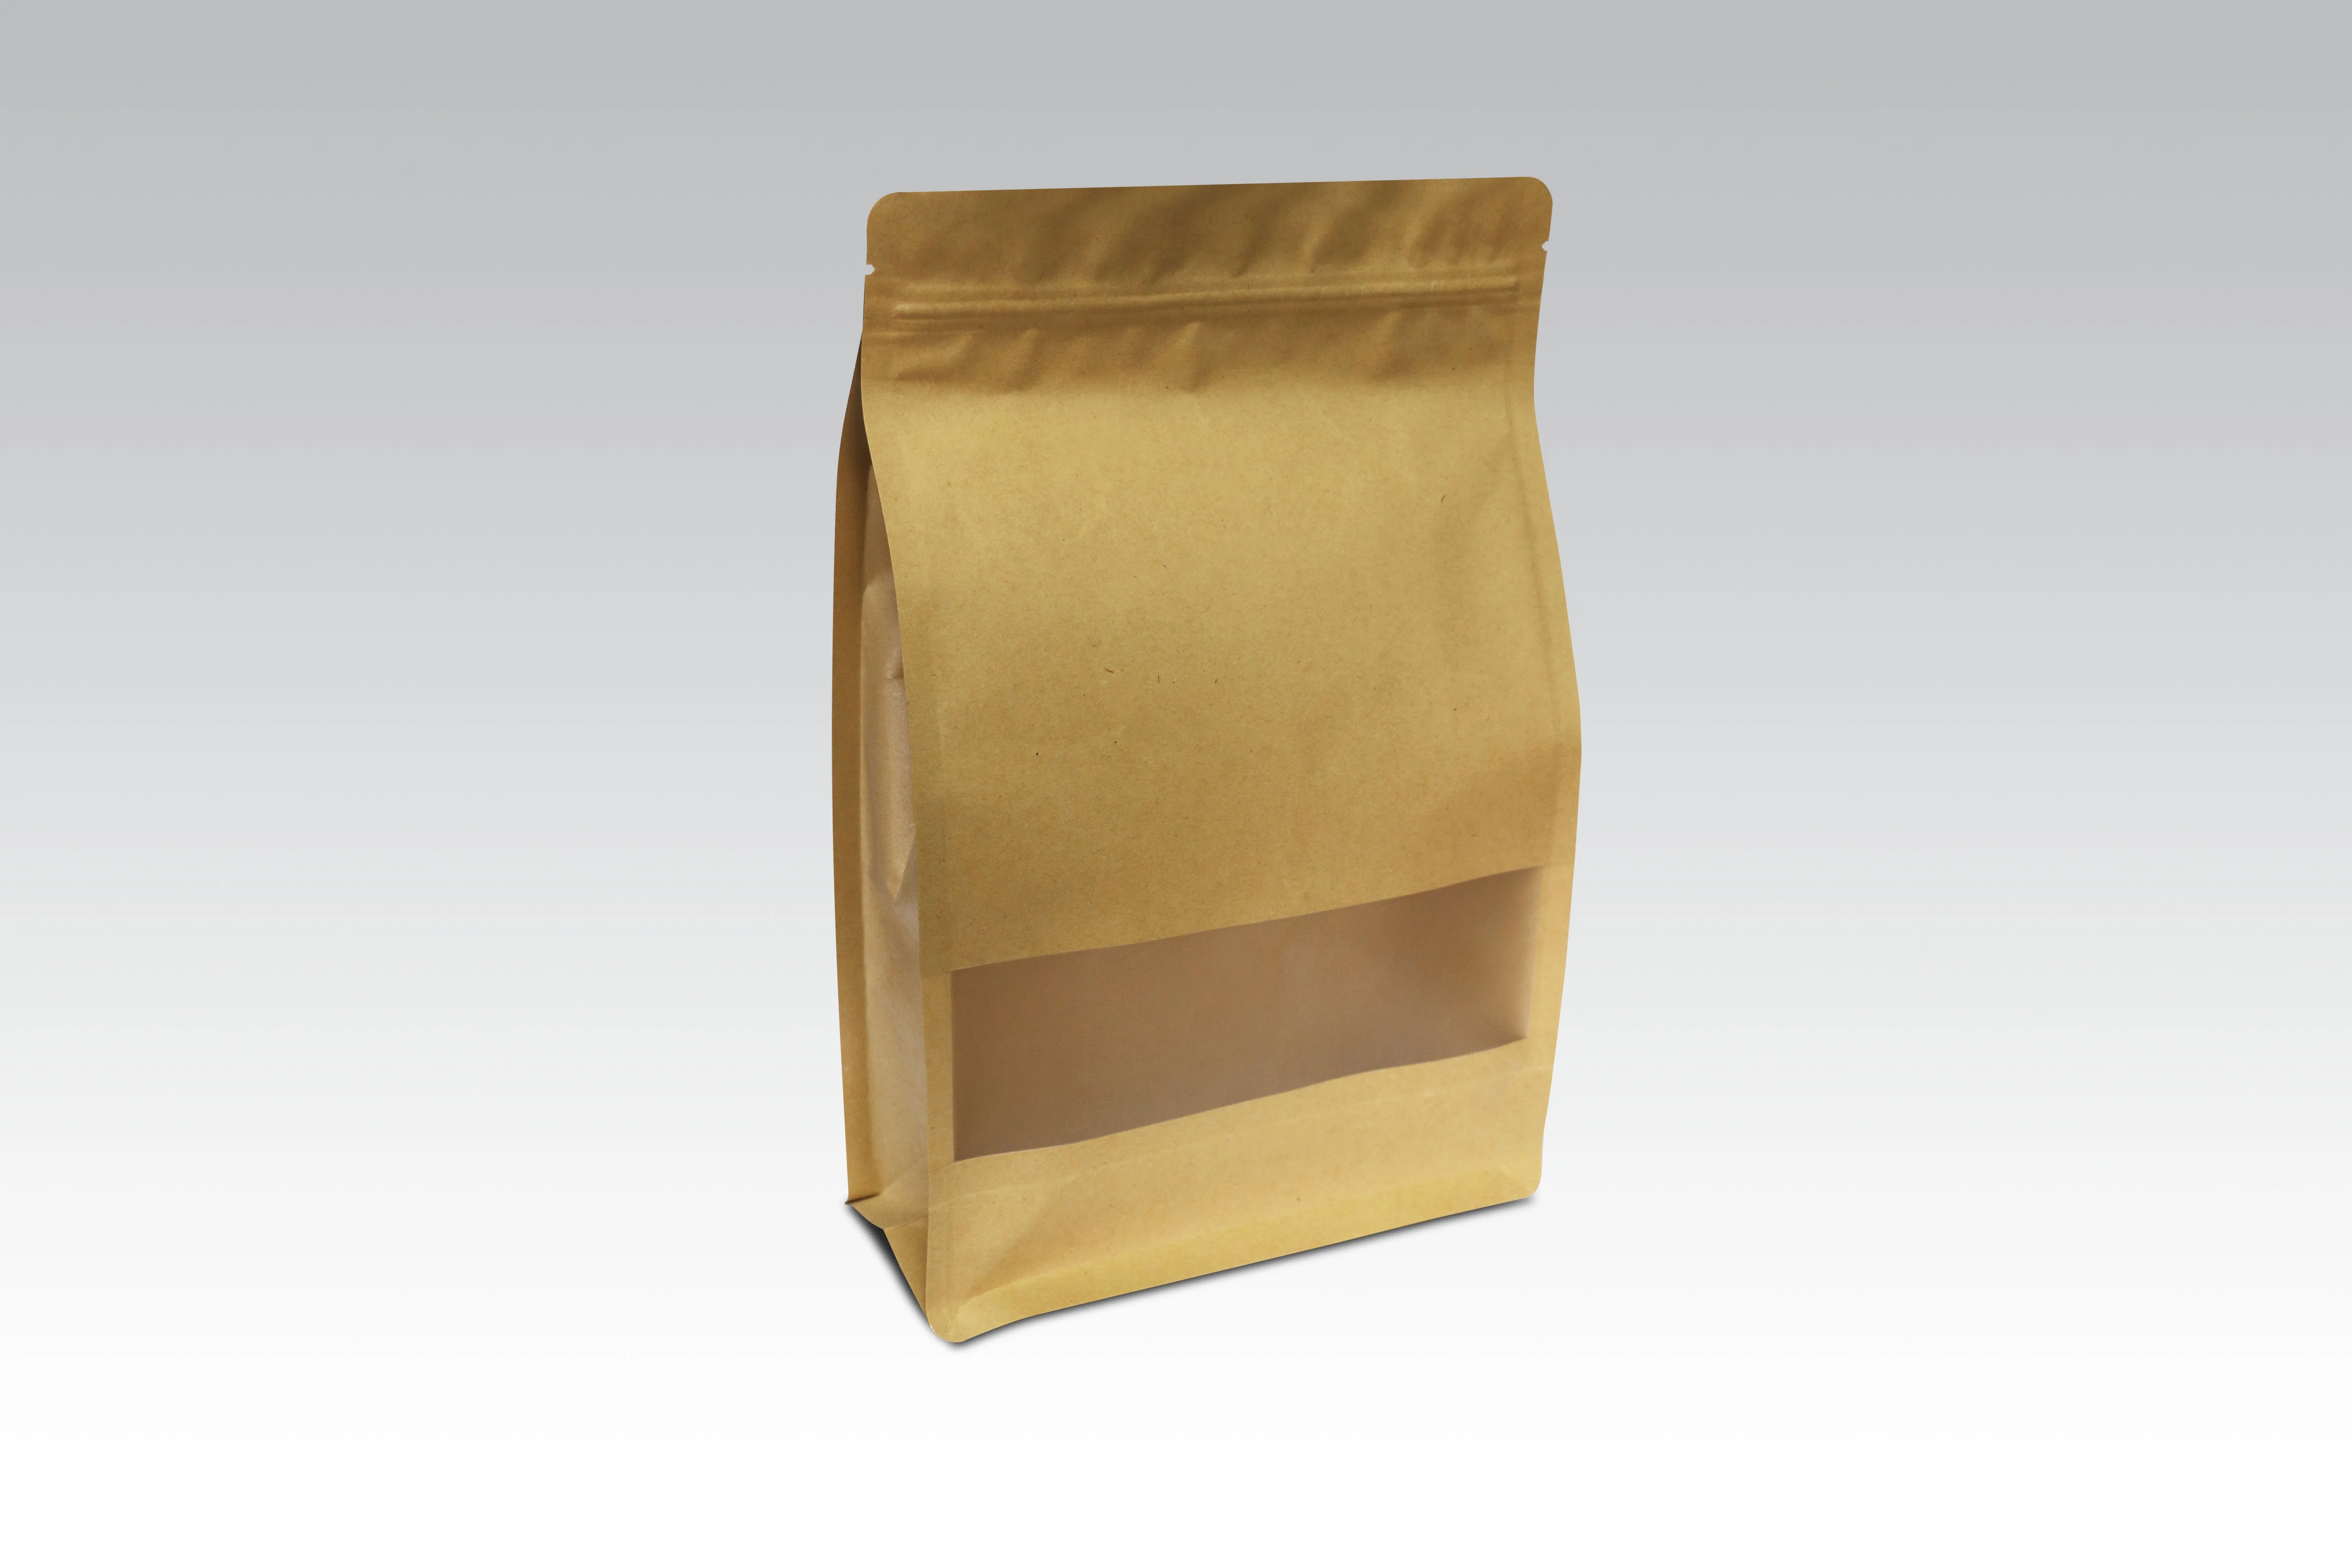 Flache Boden Beutel Brown Kraftpapier Beutel Kaffee Verpackung Taschen